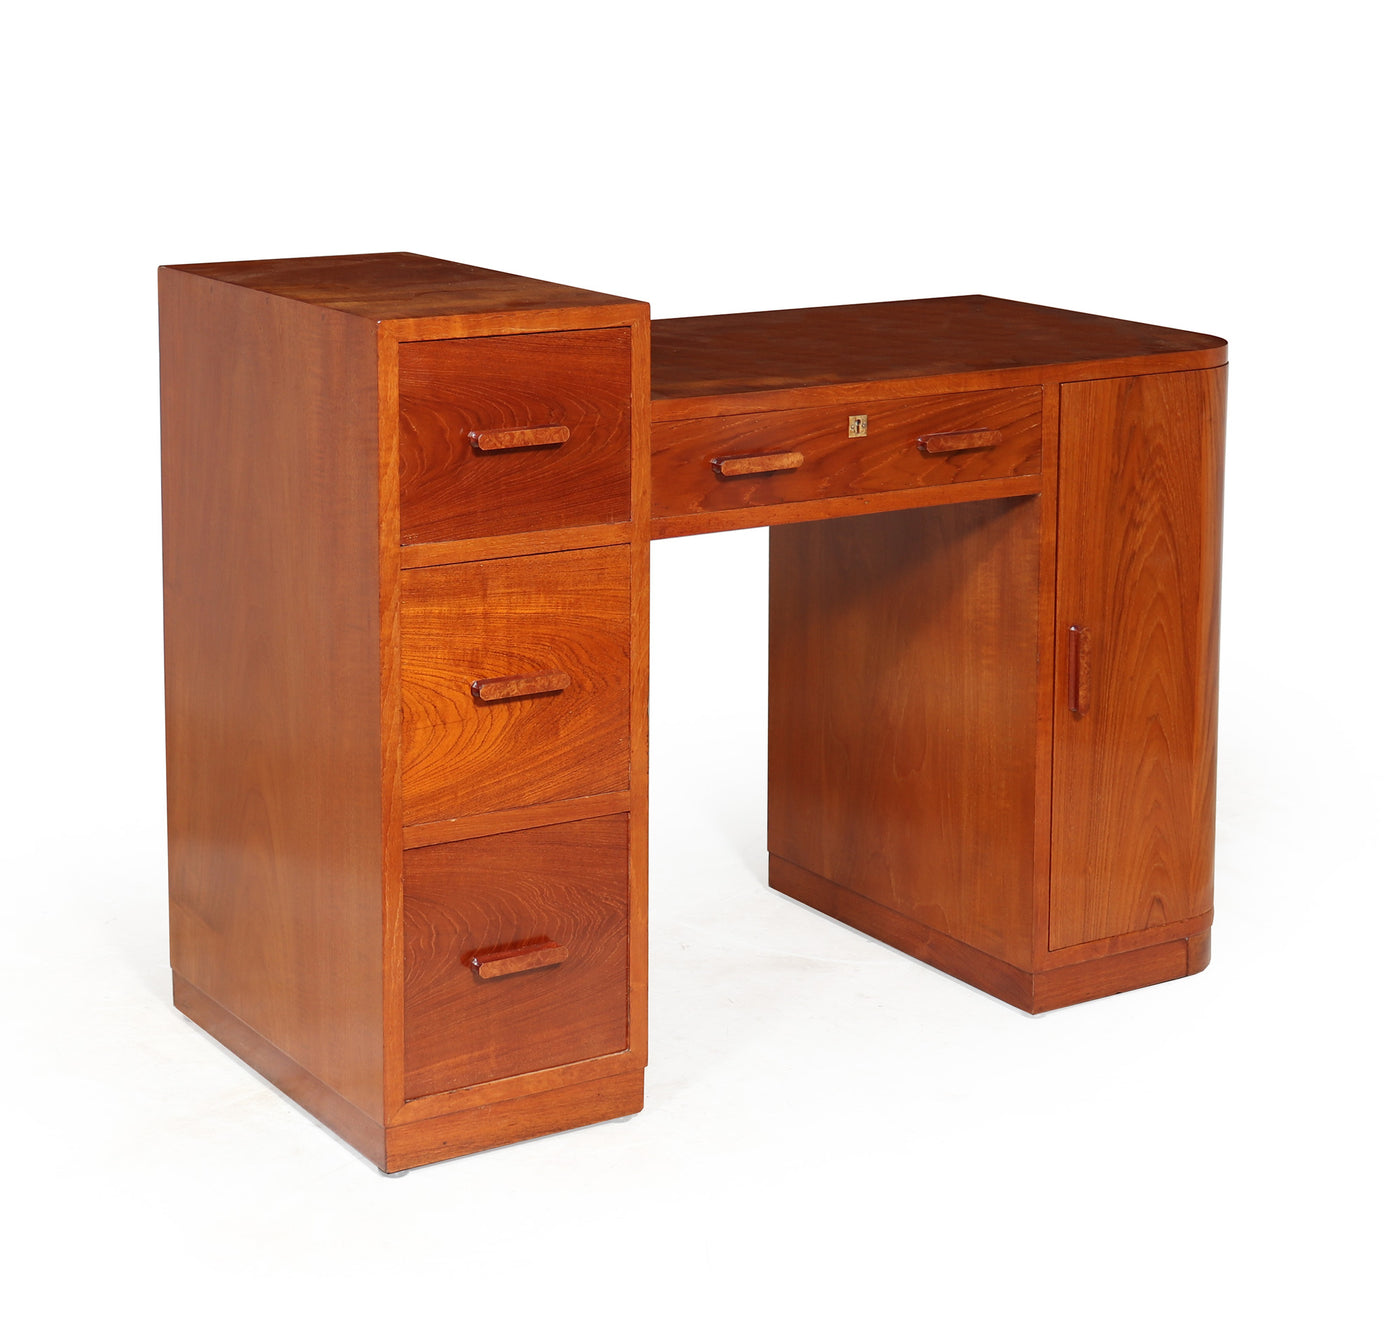 English Art Deco Desk in Solid Cherry Wood c1930